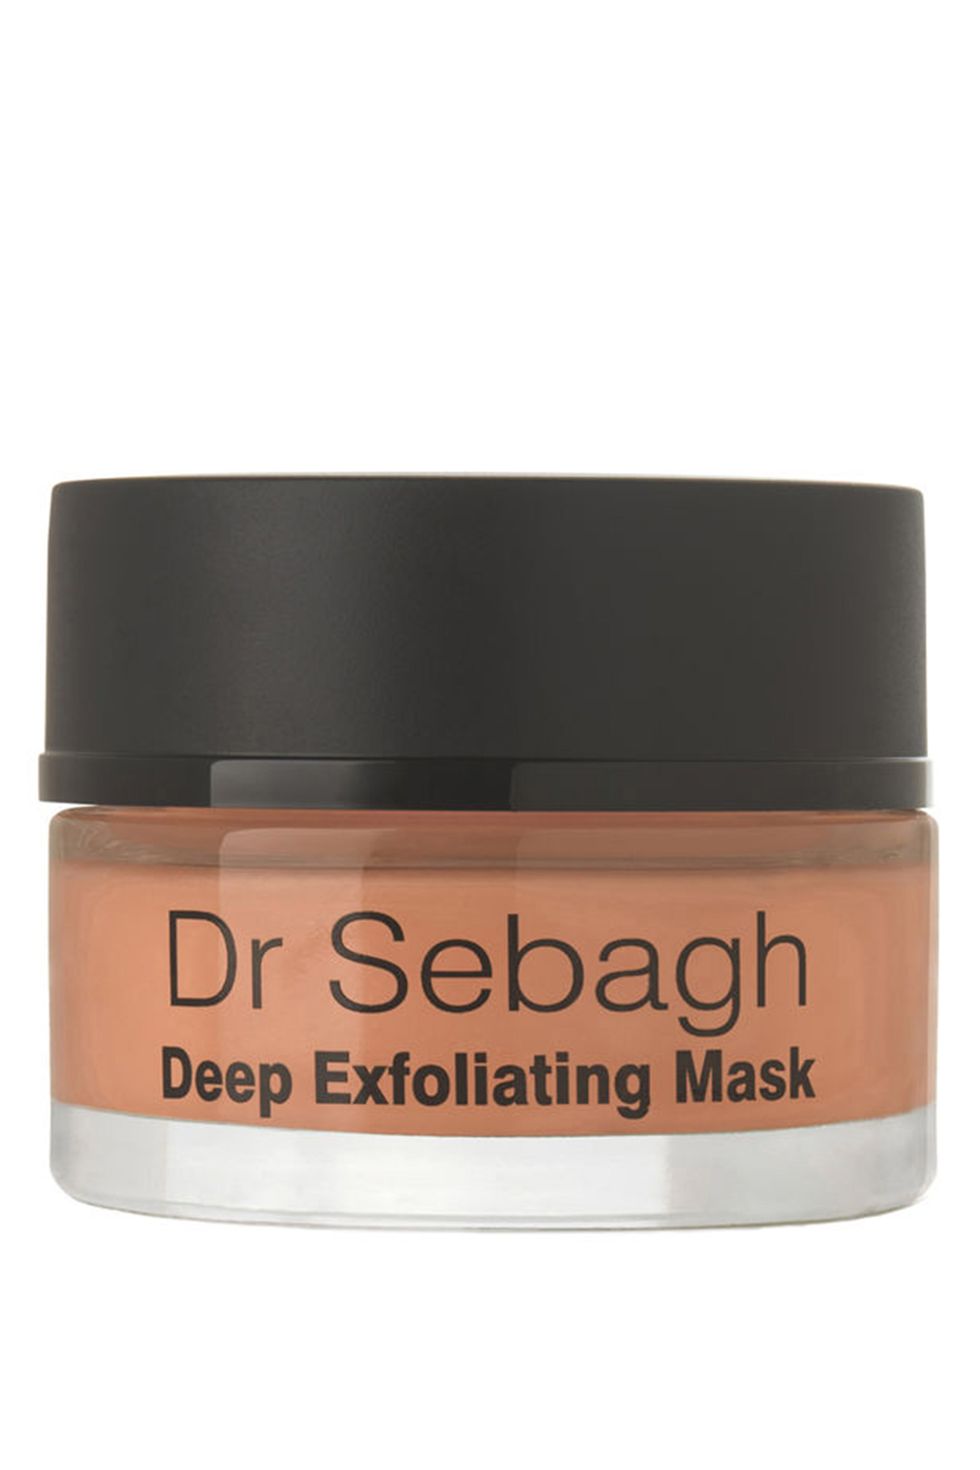 Dr Sebagh deep exfoliating mask